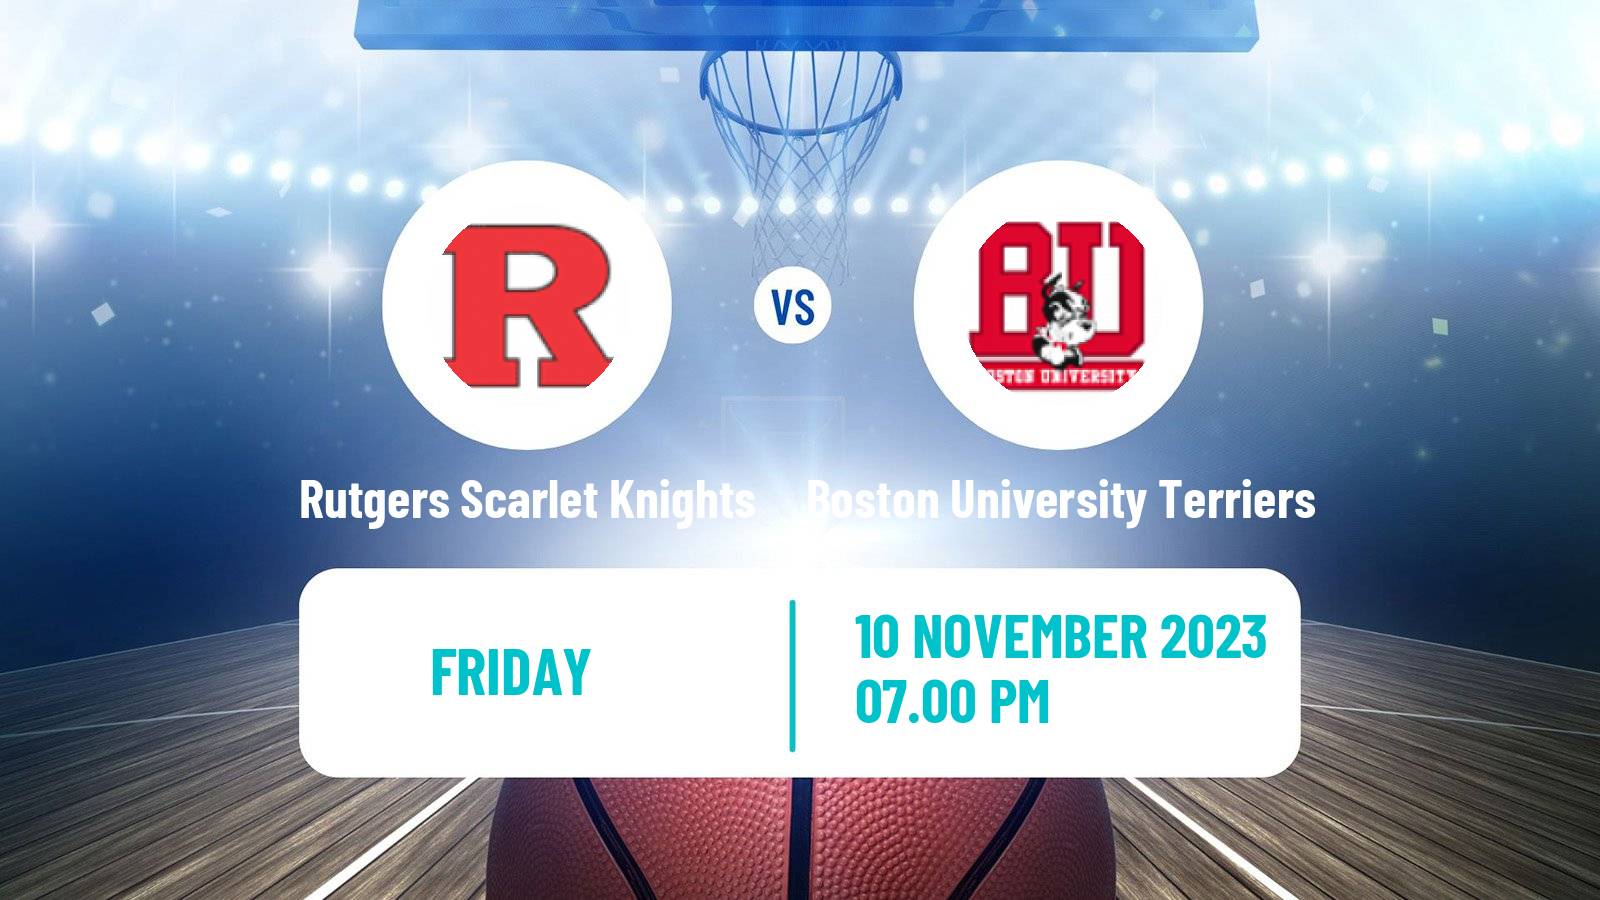 Basketball NCAA College Basketball Rutgers Scarlet Knights - Boston University Terriers